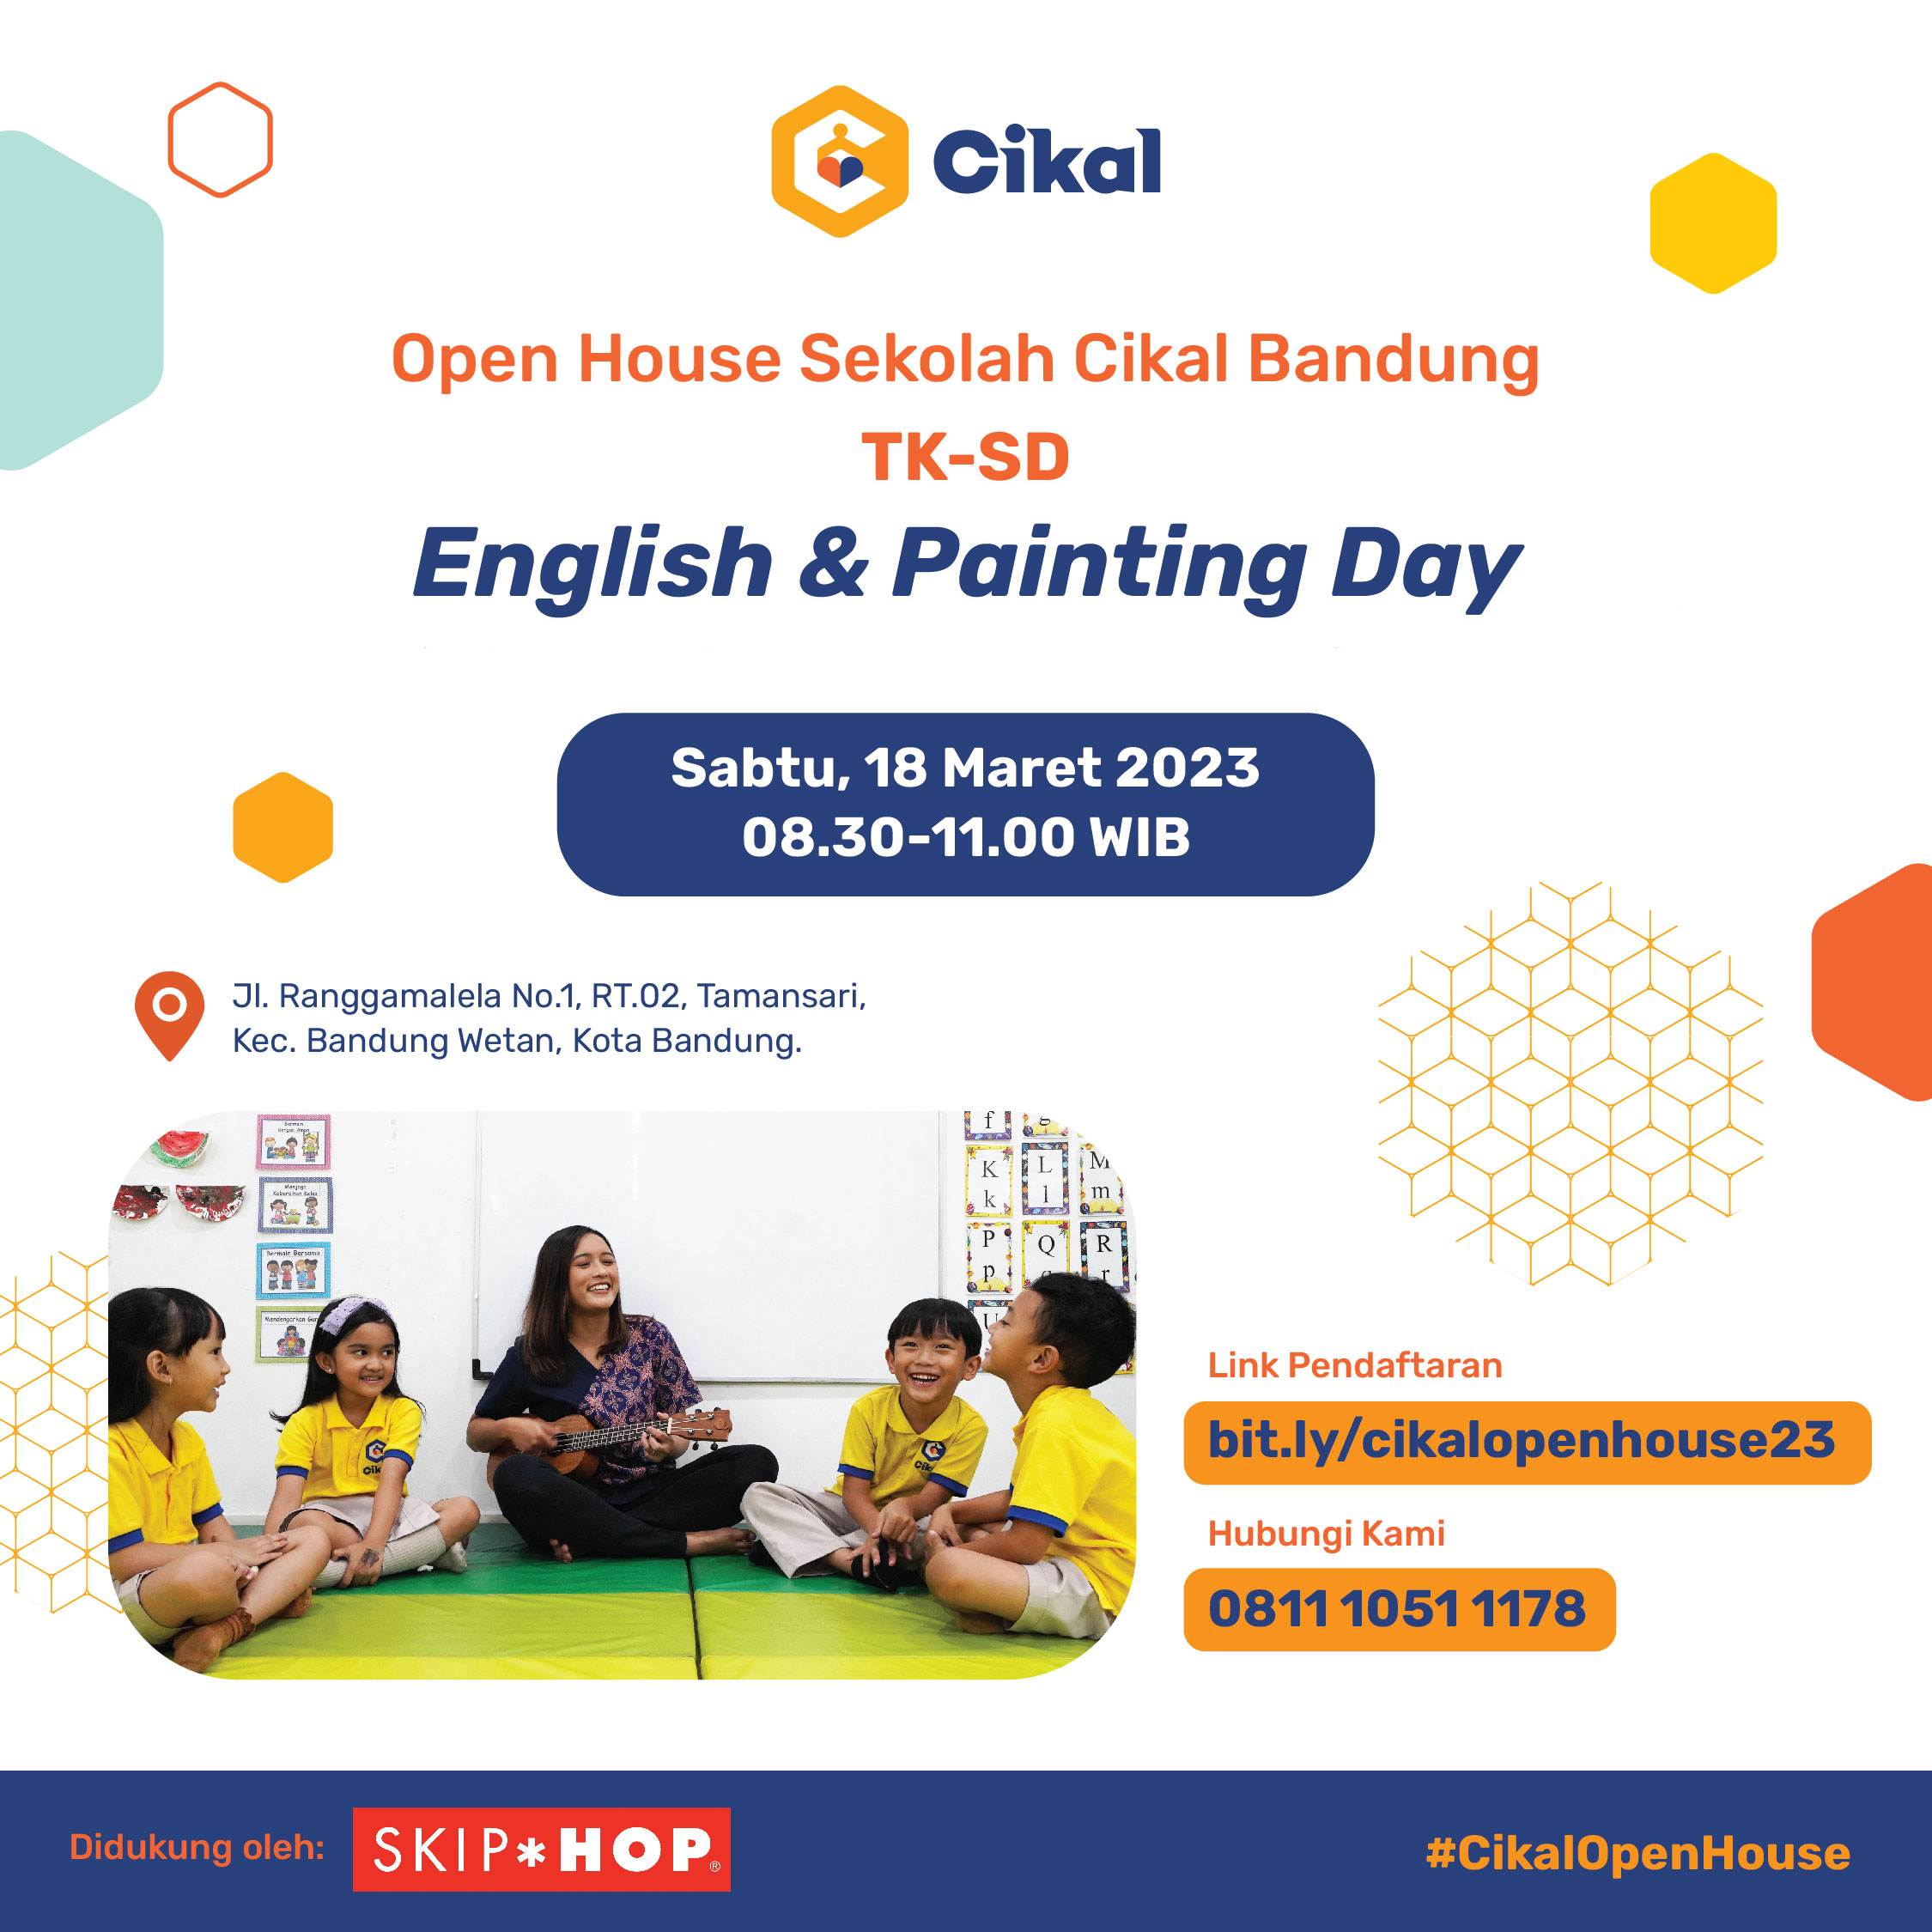 Open House Sekolah Cikal Bandung (Maret 2023)